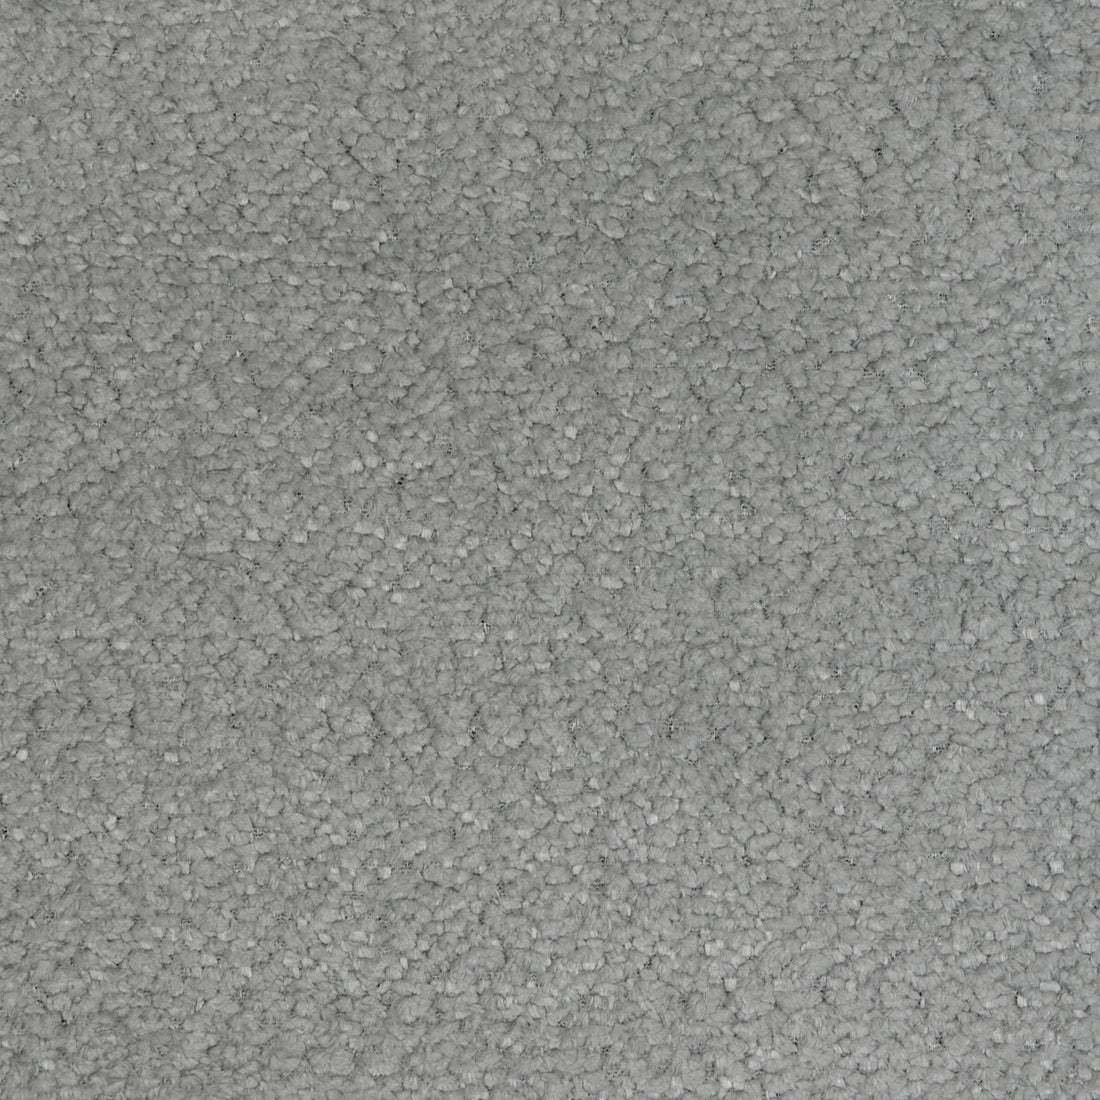 Kravet Smart fabric in 36984-52 color - pattern 36984.52.0 - by Kravet Smart